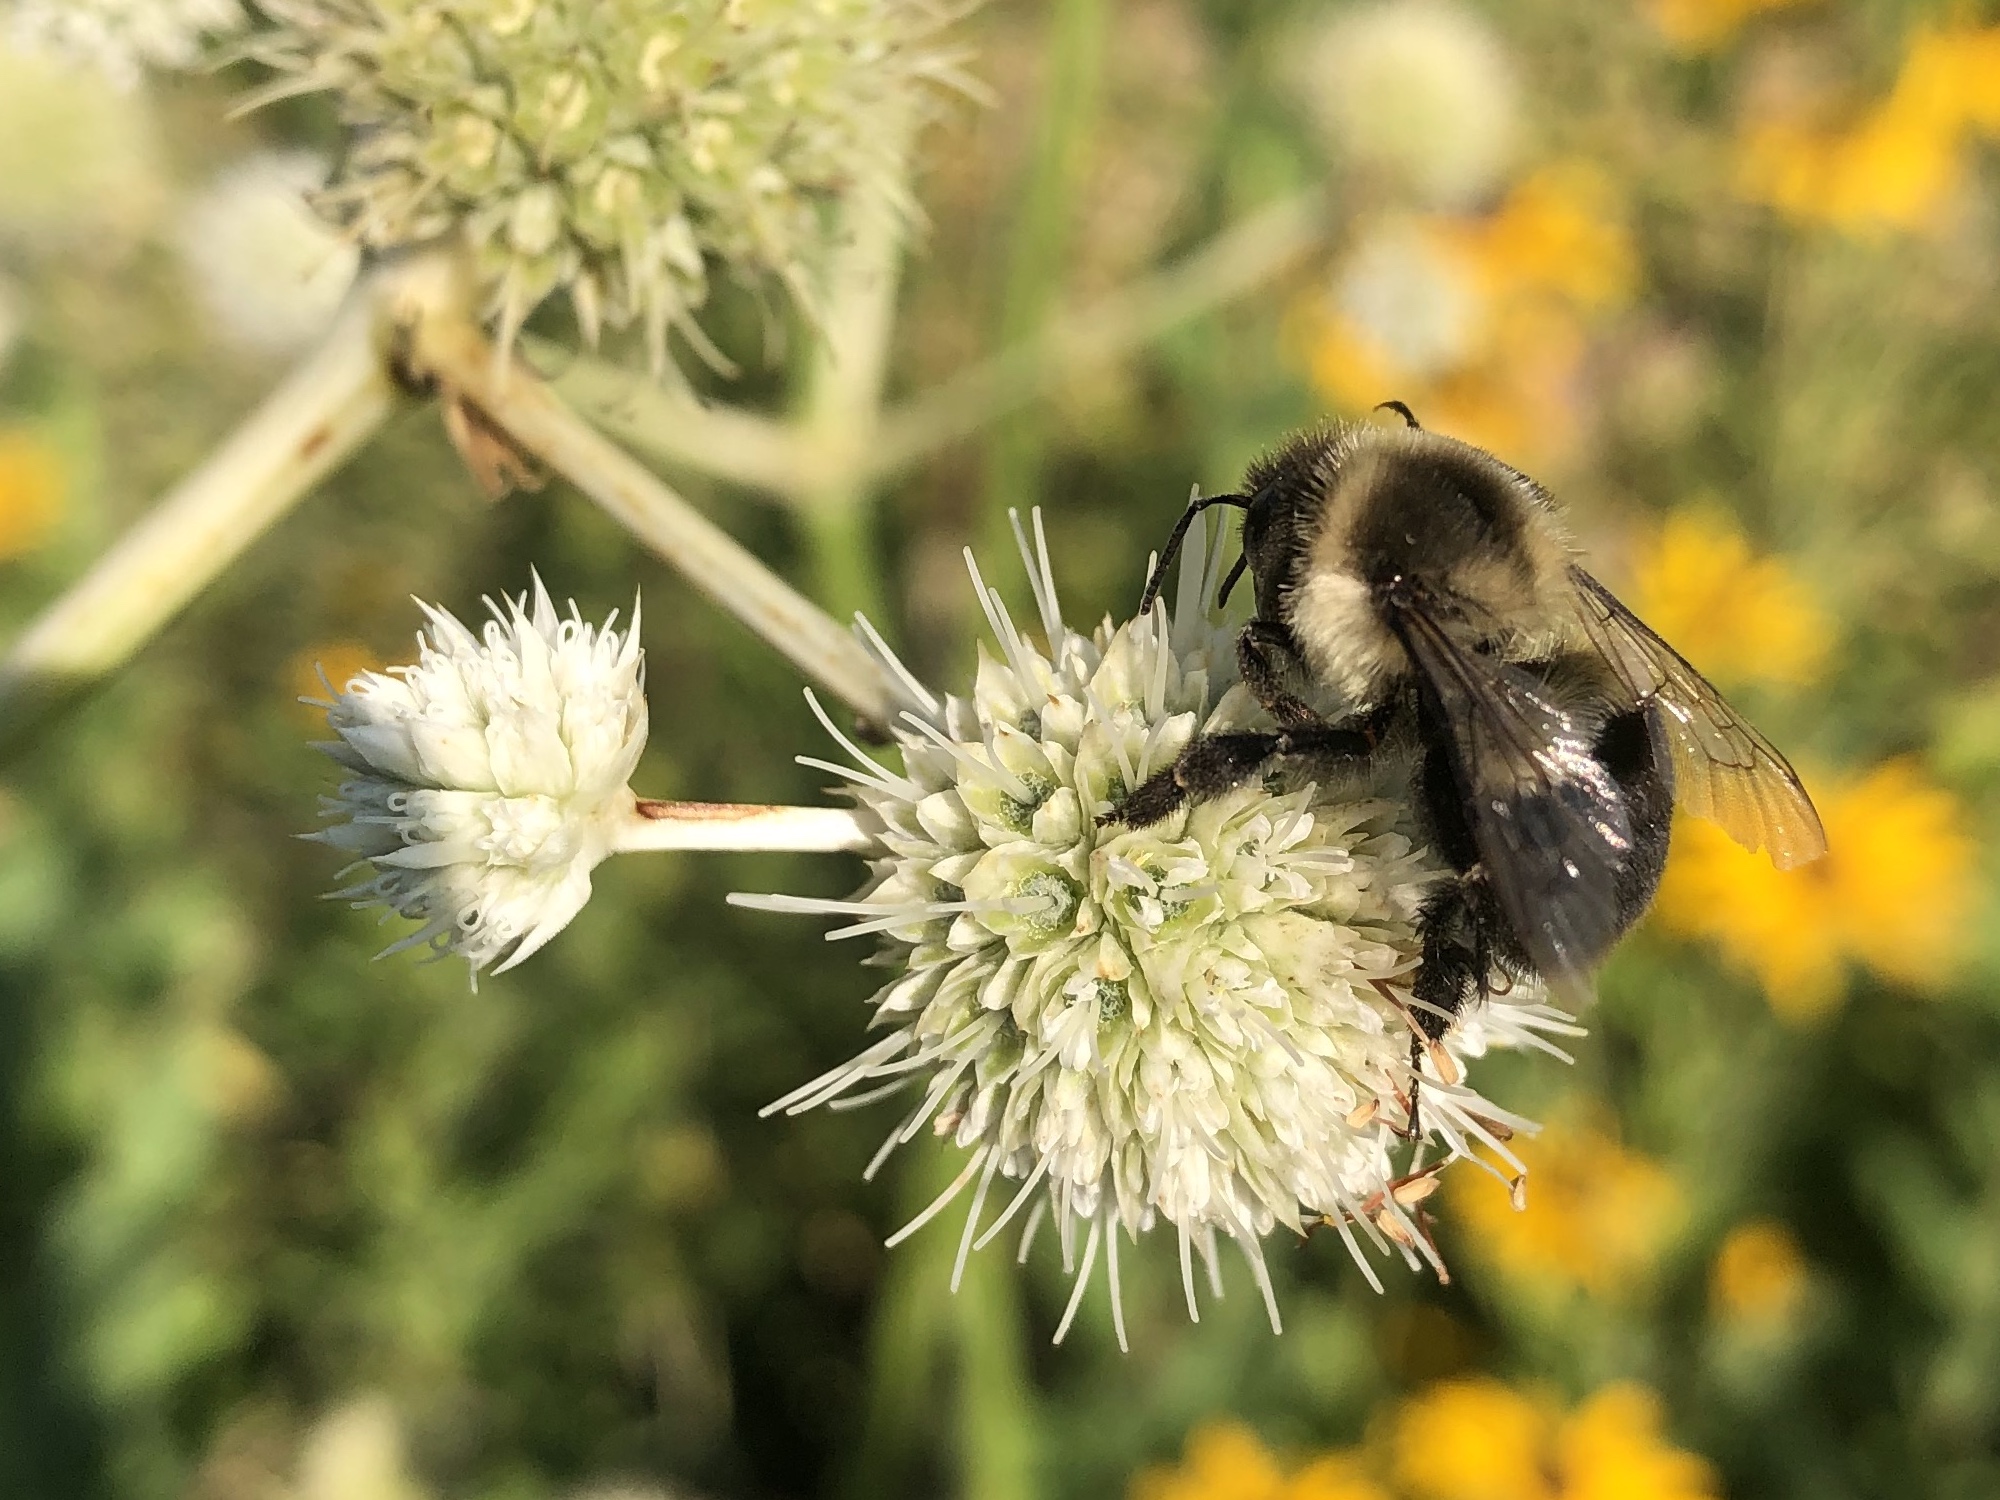 Bumblebee on Rattlesnake Master near UW Arboretum Visitor Center in Madison, Wisconsin on on August 2, 2021.